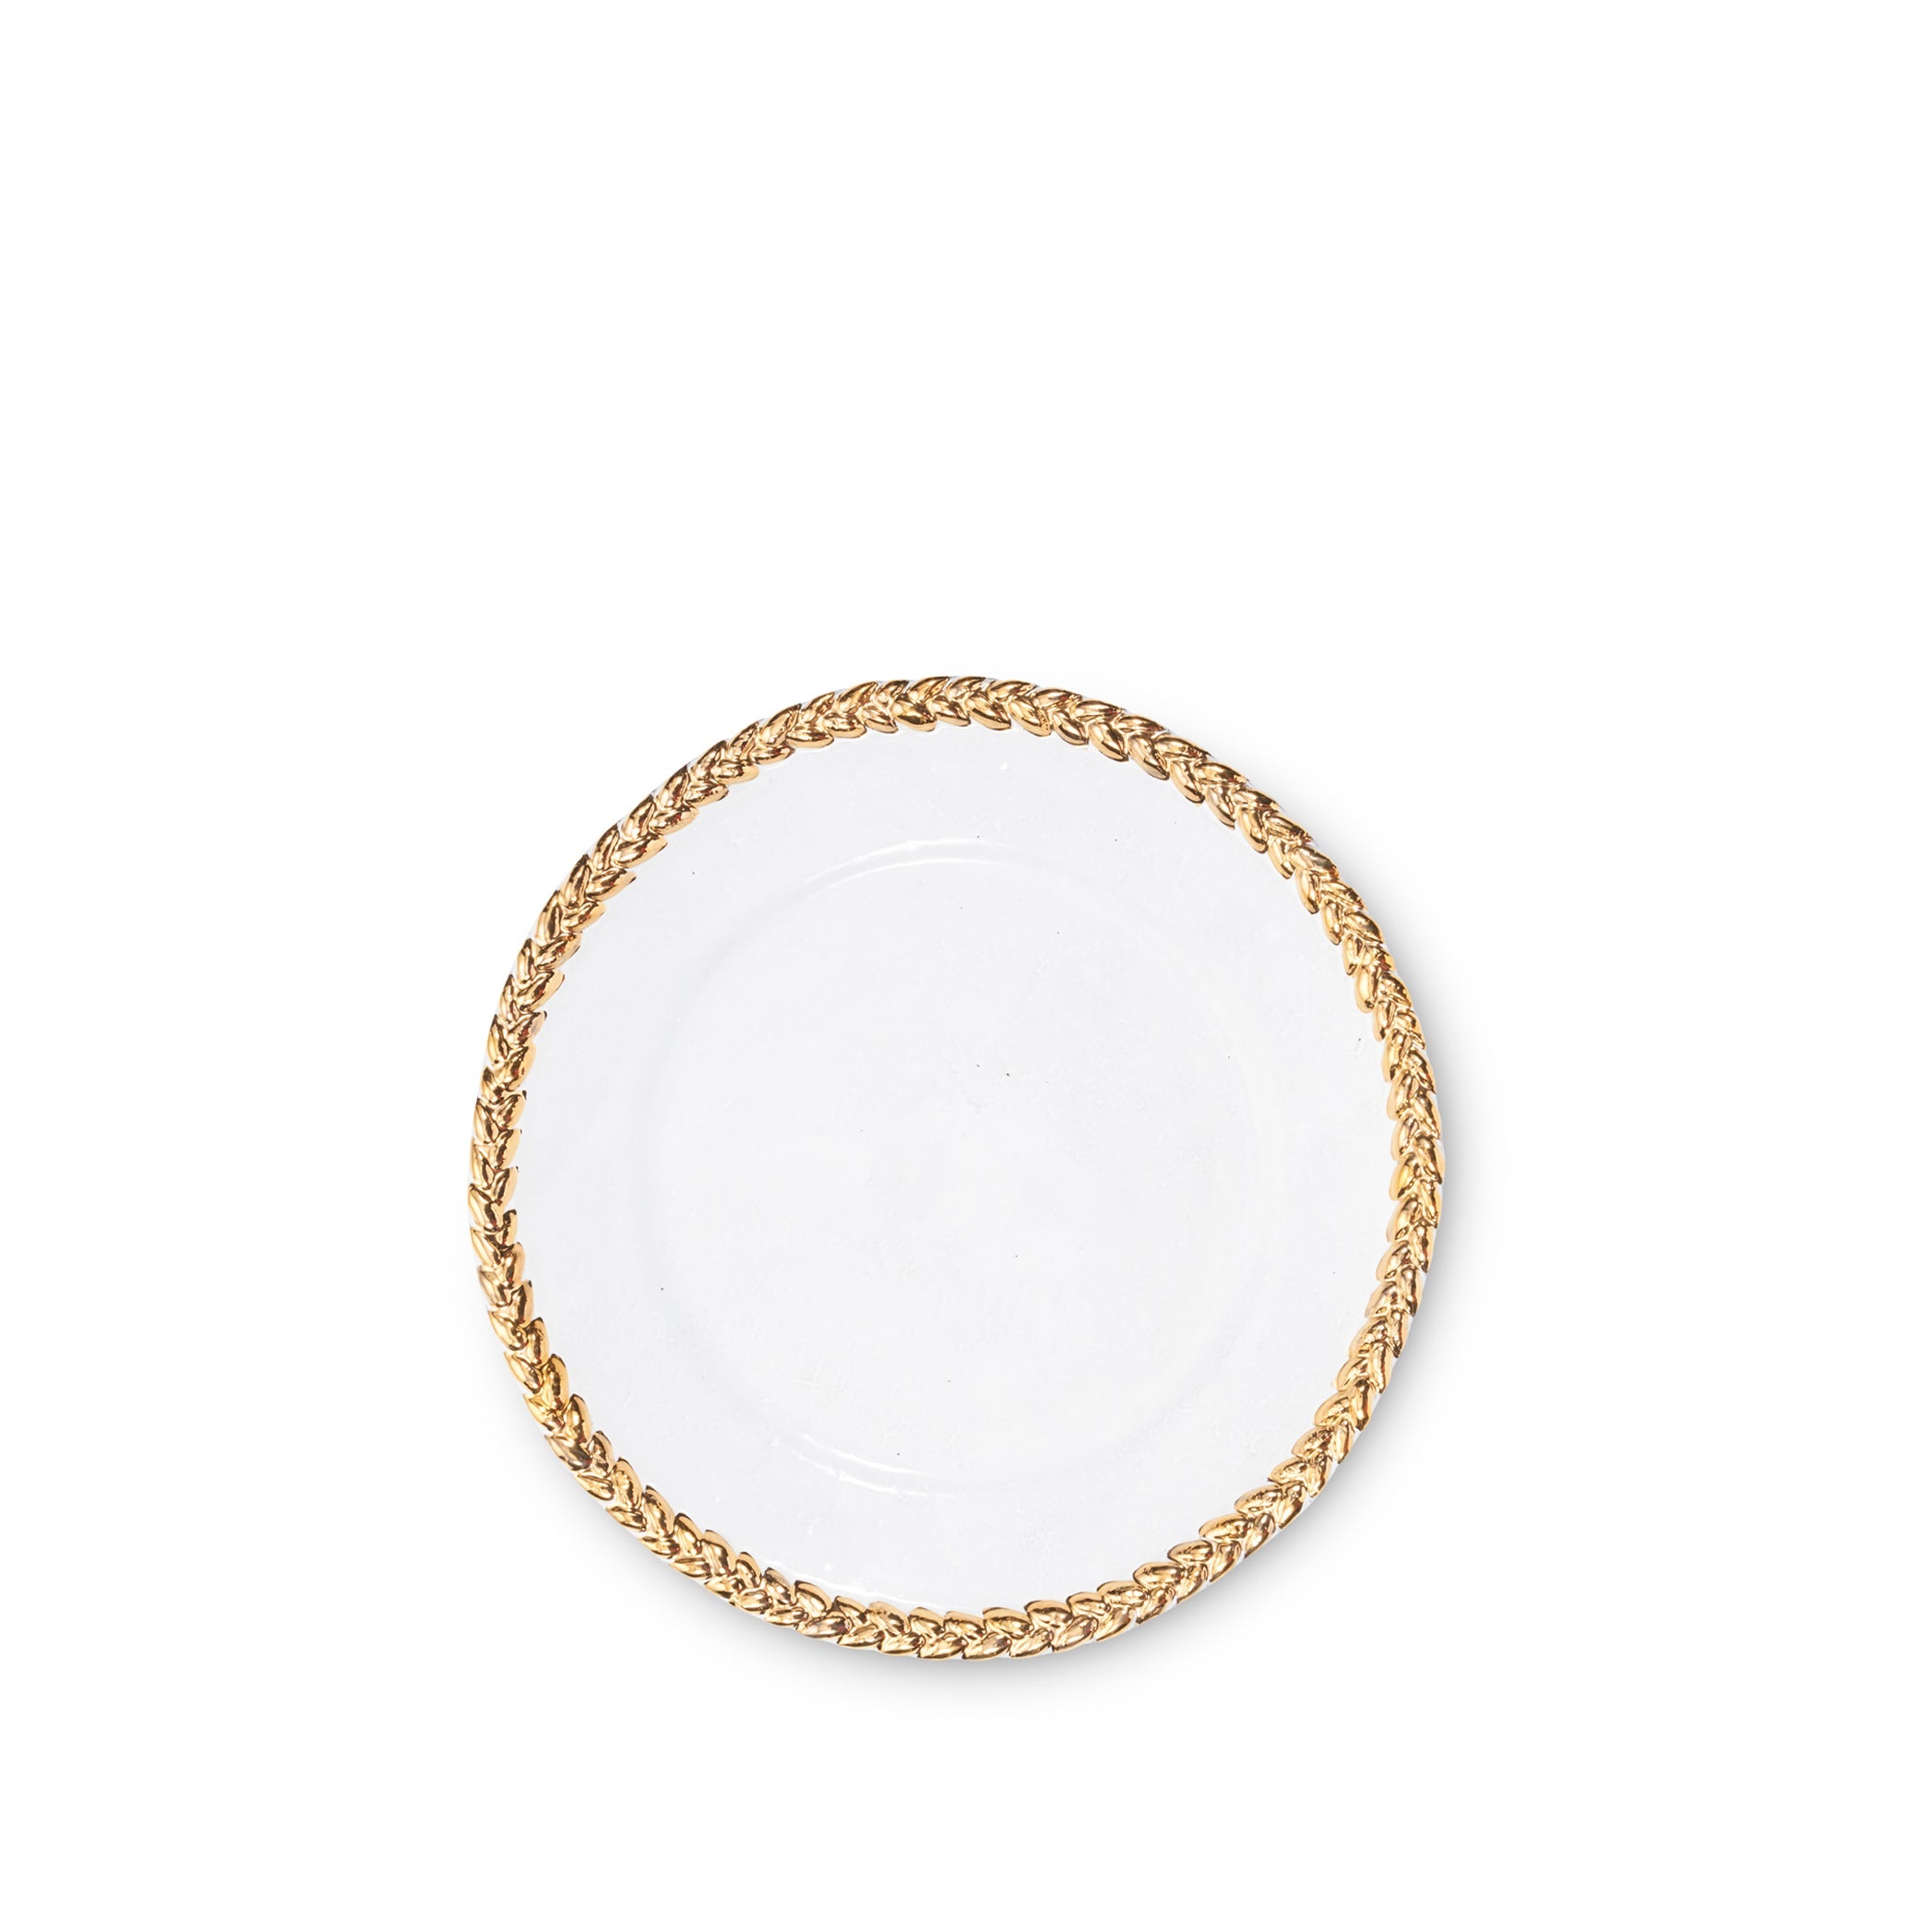 Joséphine Dessert Plate with Gold Rim by Astier de Villatte, 20cm